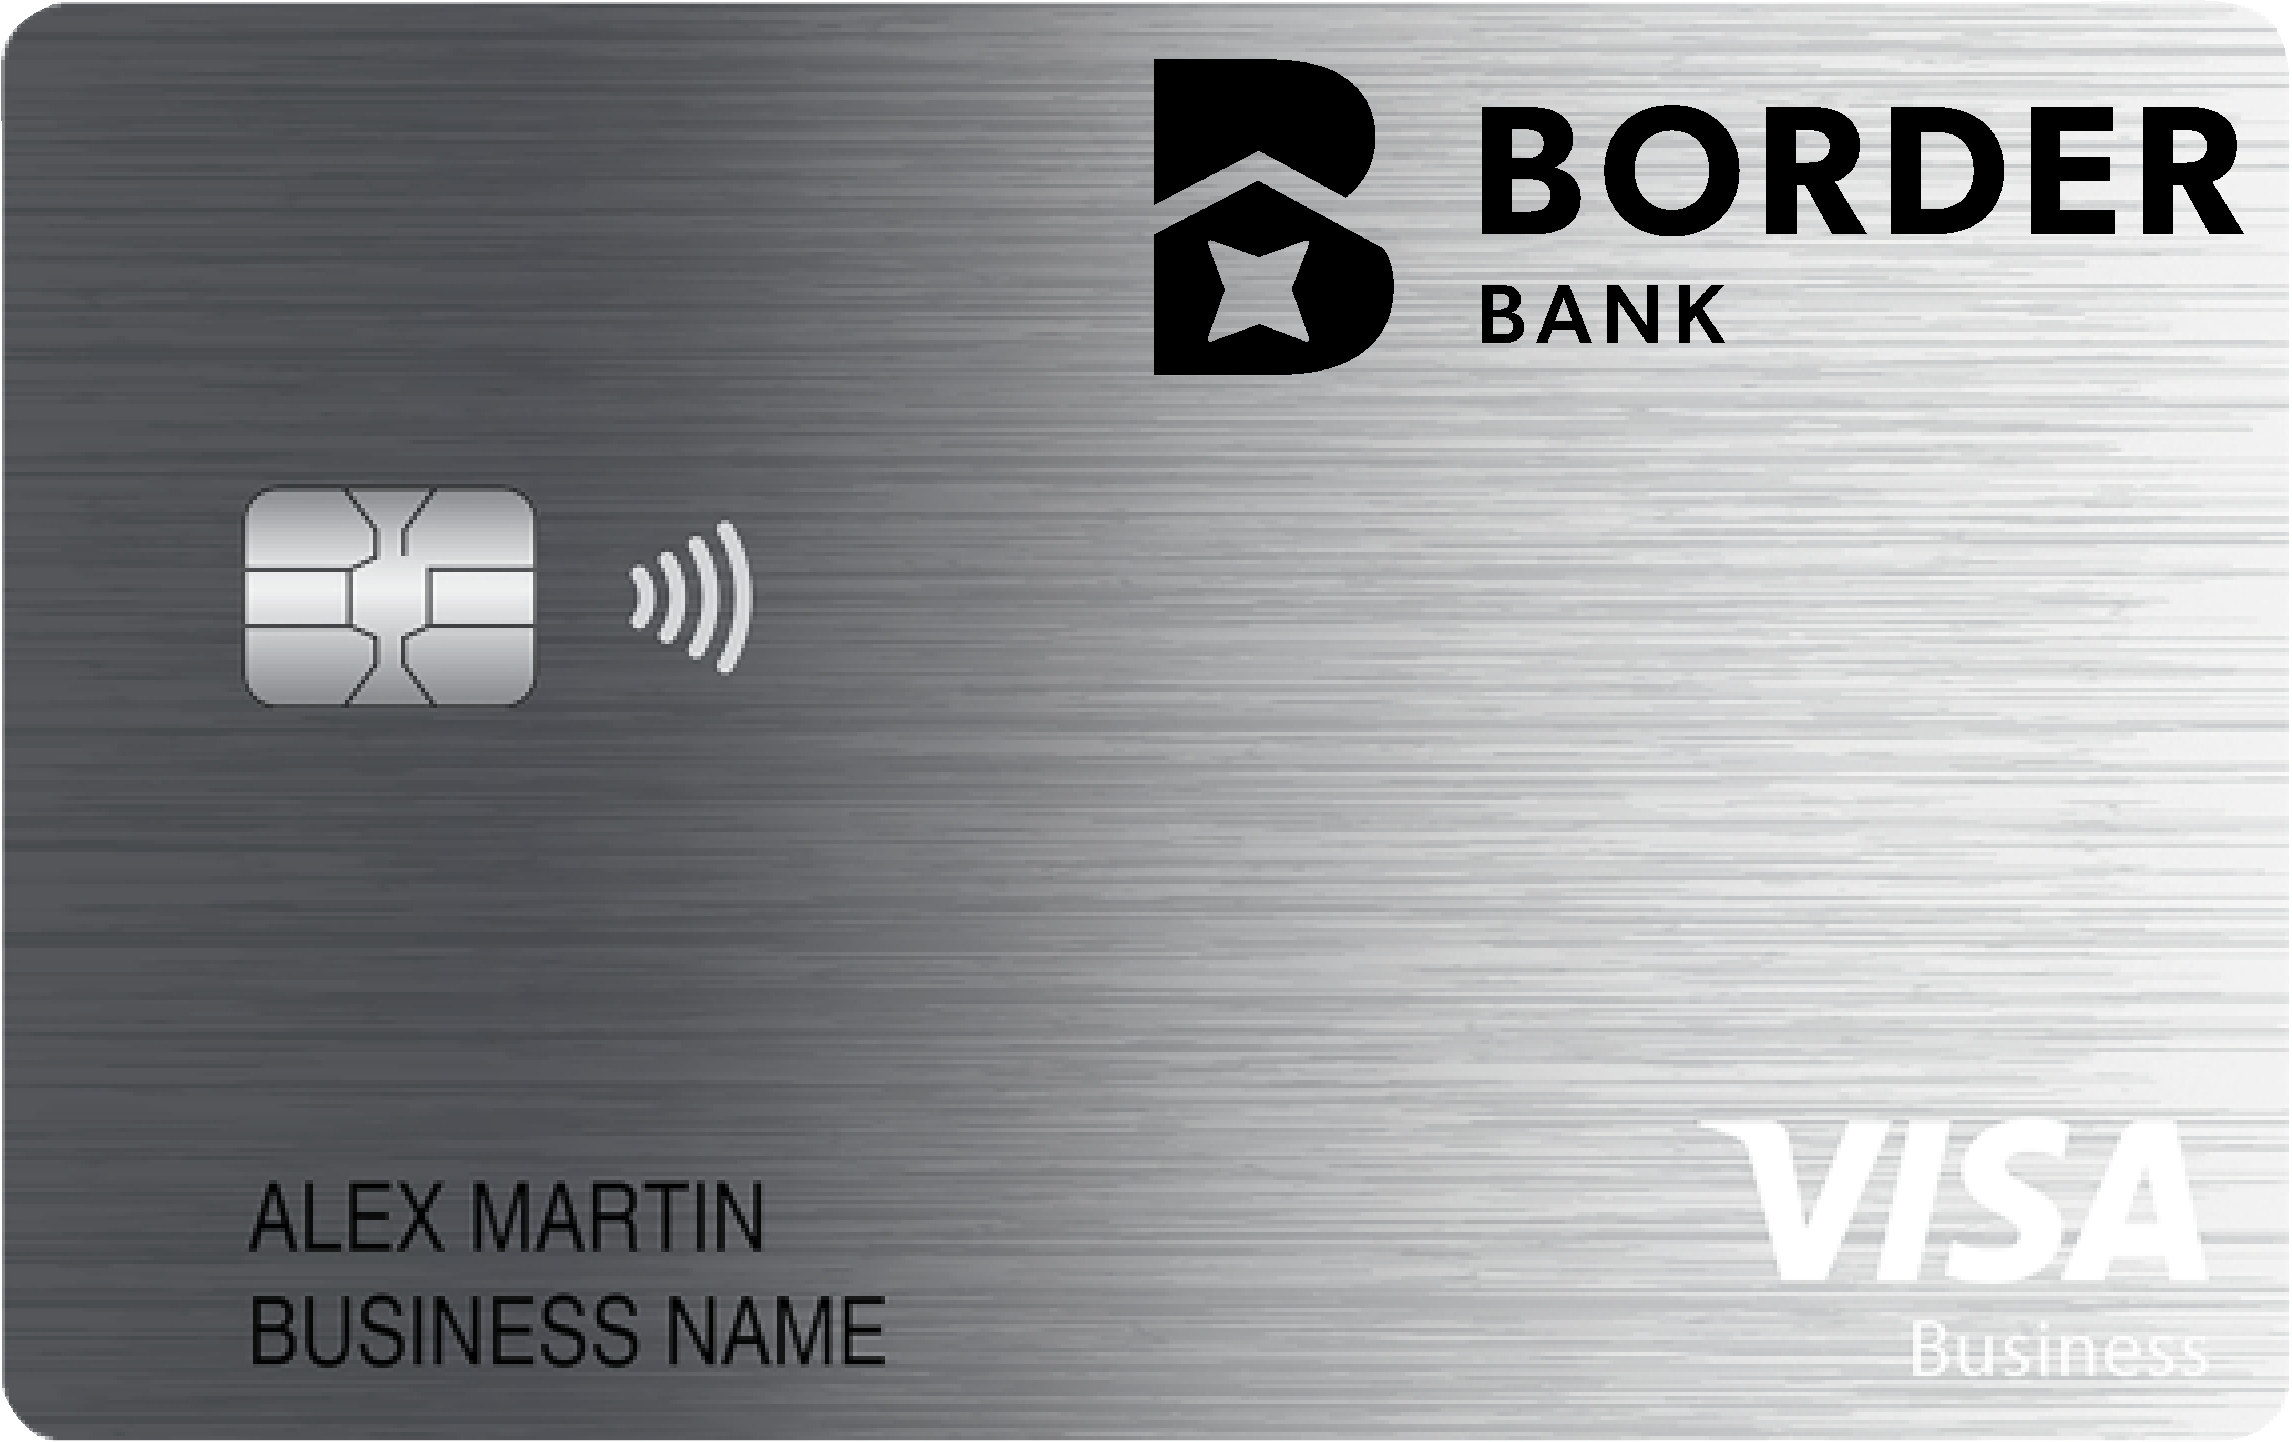 Border Bank Business Cash Preferred Card